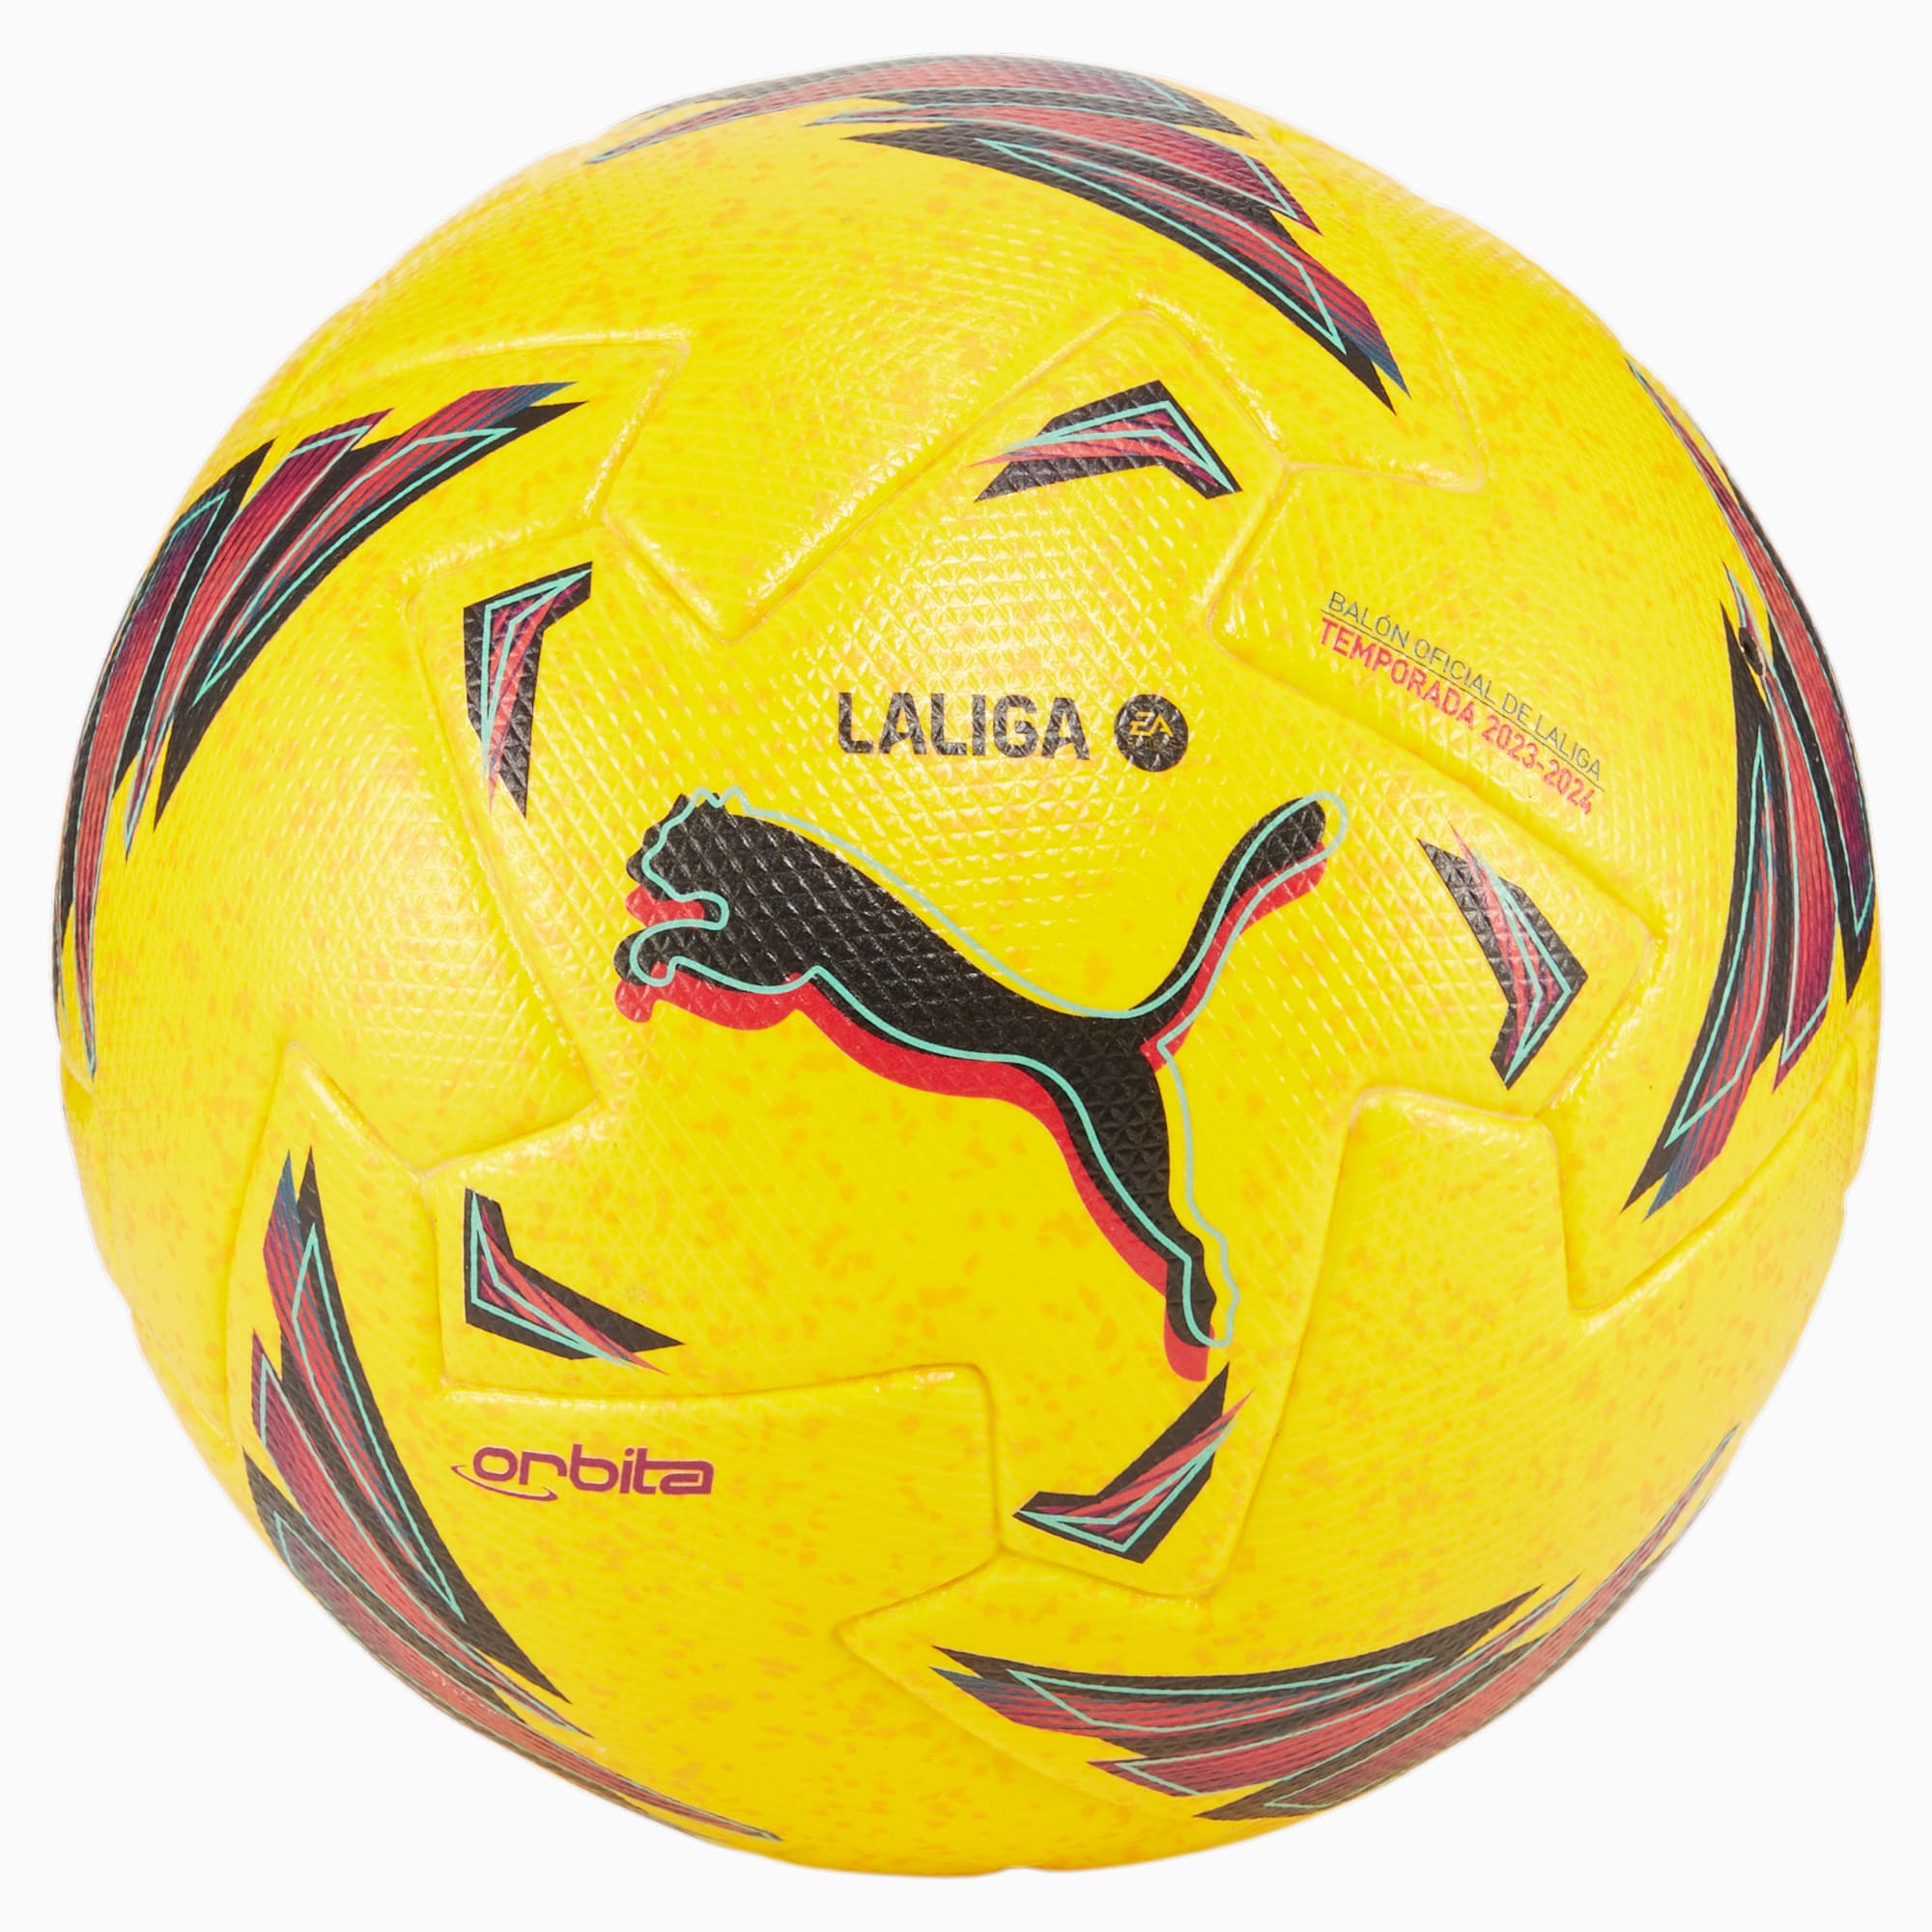 PUMA Orbita LaLiga 1 Fußball, Gelb, Größe: 5